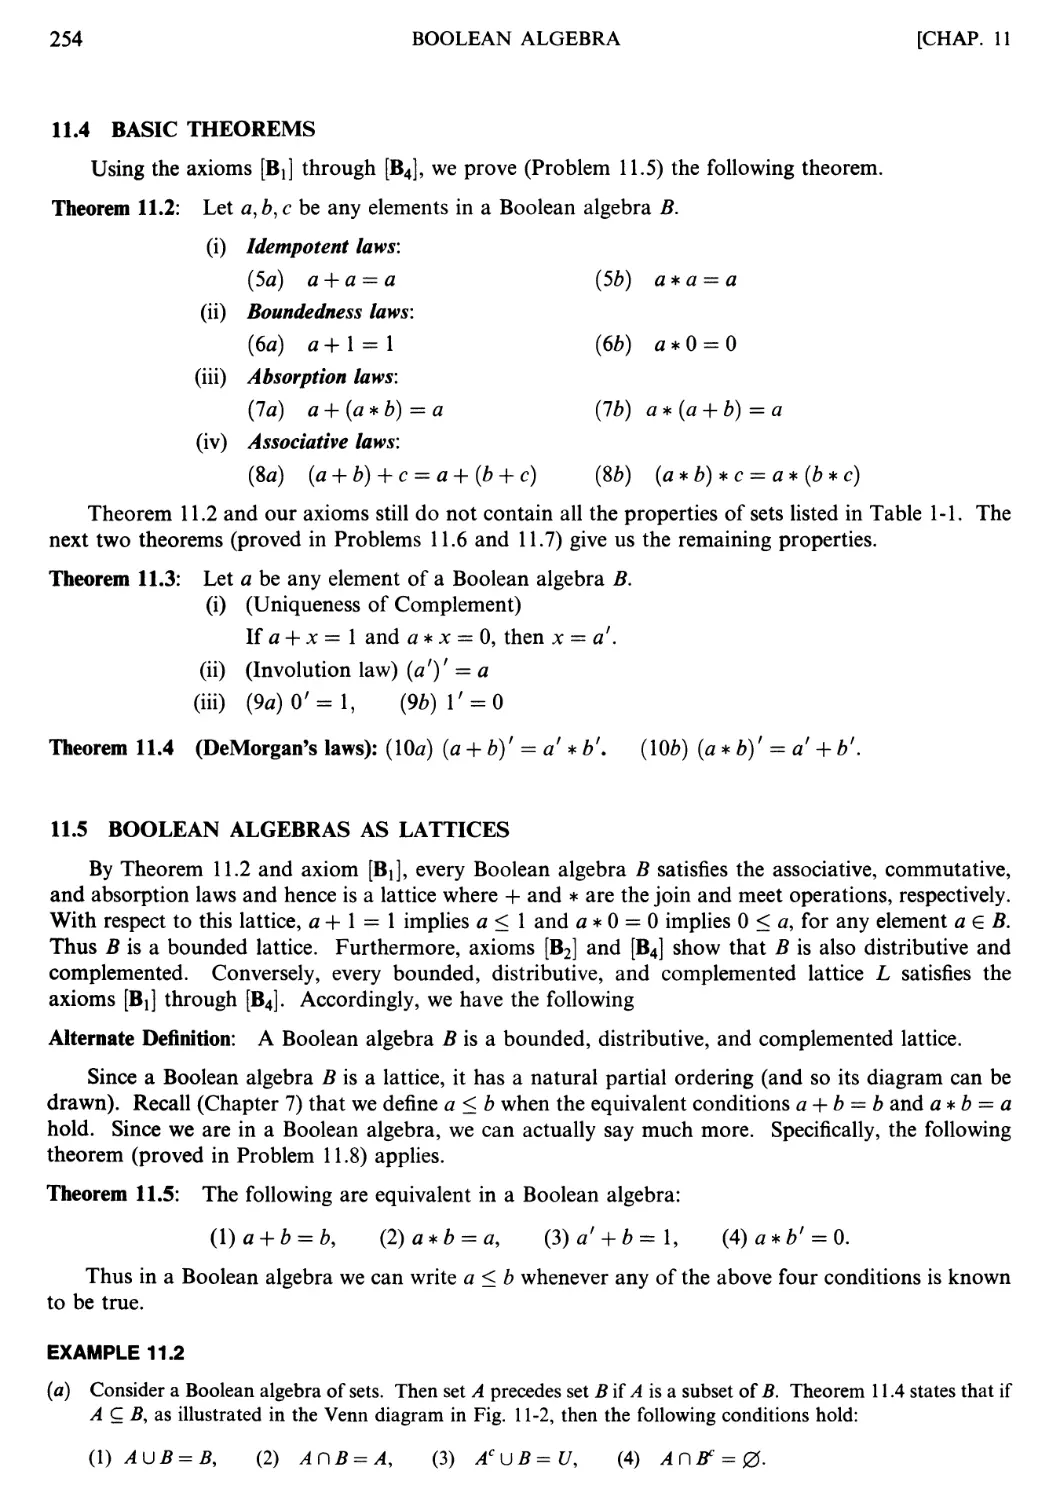 11.4 Basic theorems
11.5 Boolean algebras as lattices